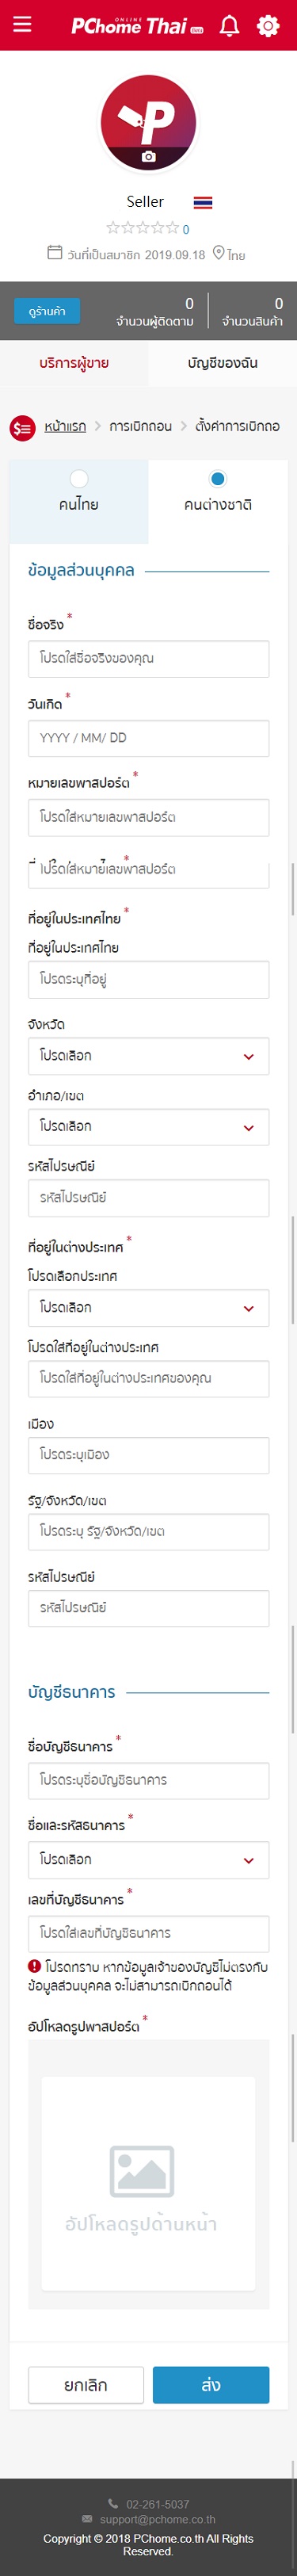 STEP 05-2. 若您不具泰國國民身分，請選擇外國人身分，依序填寫資訊並且上傳護照圖檔。